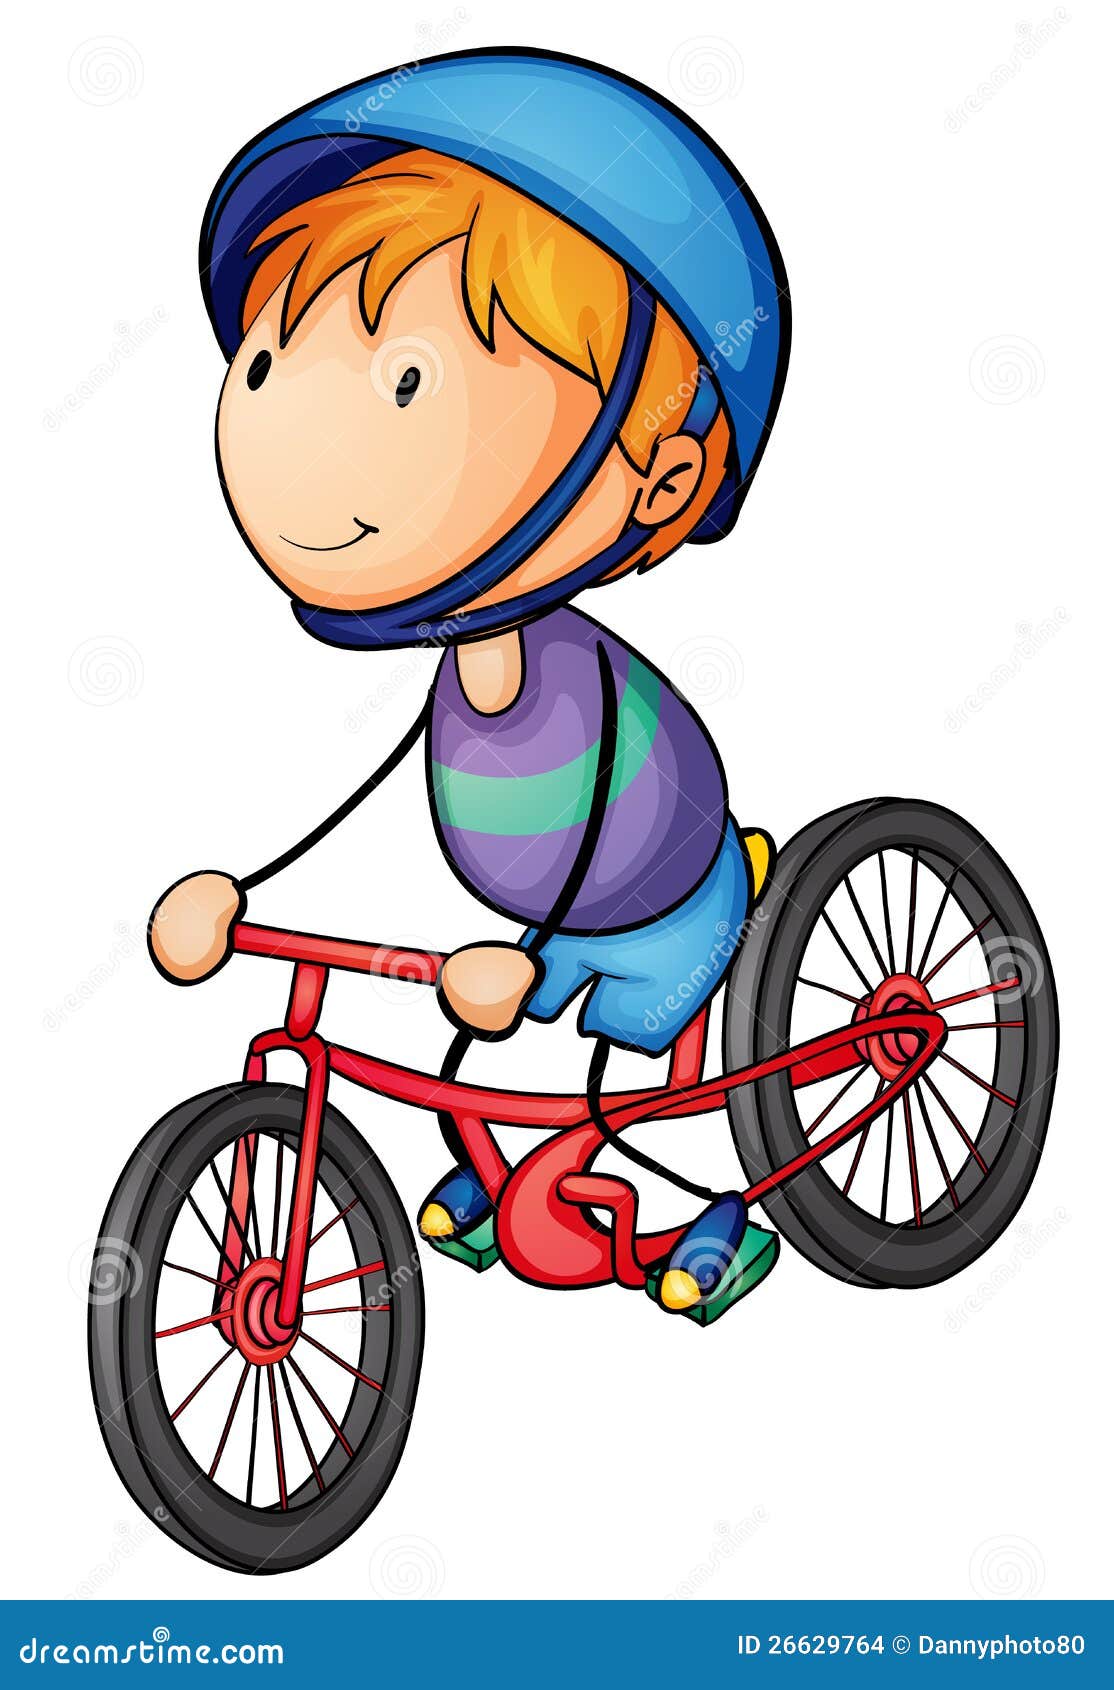 clipart boy riding bike - photo #13